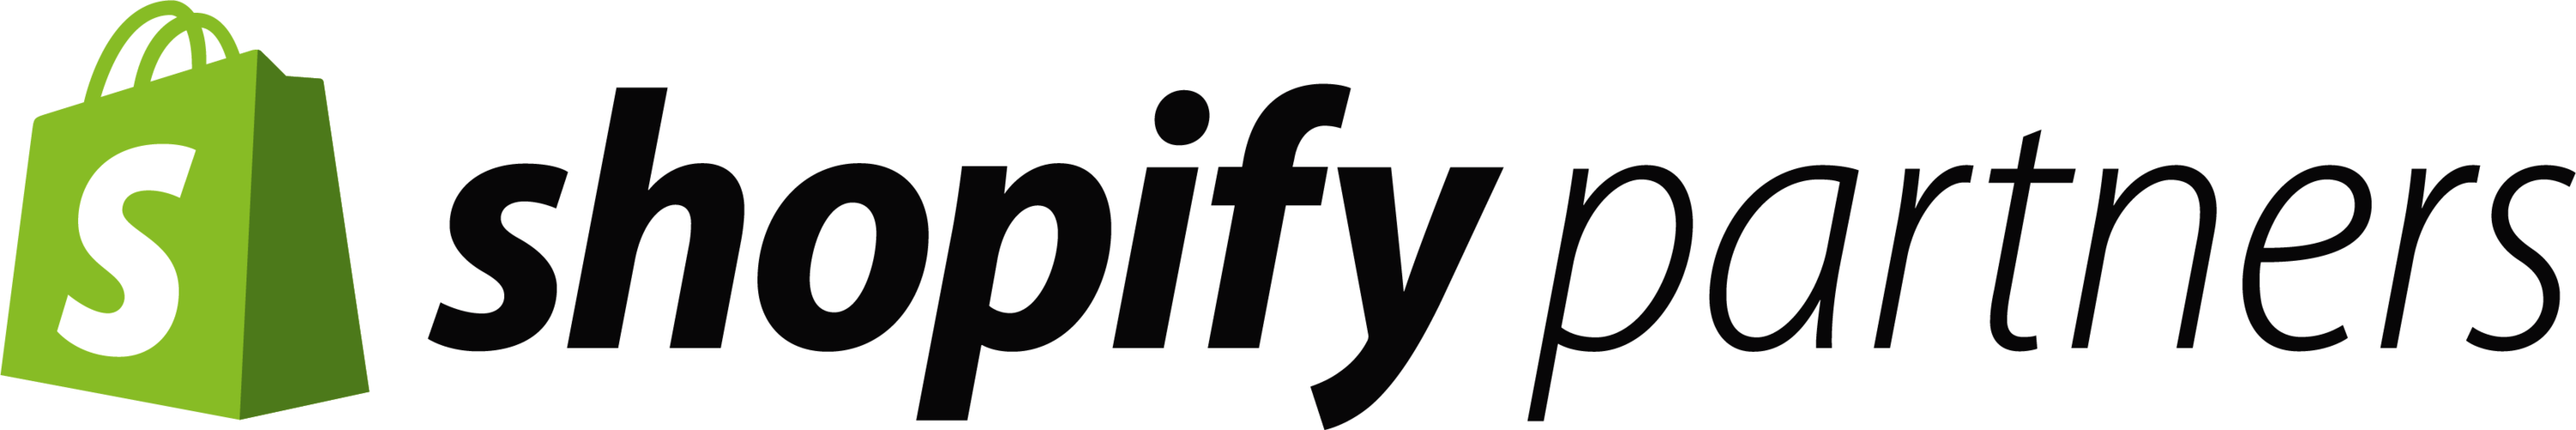 Shopify Partners - Digital Marketing Company Agency Sydney